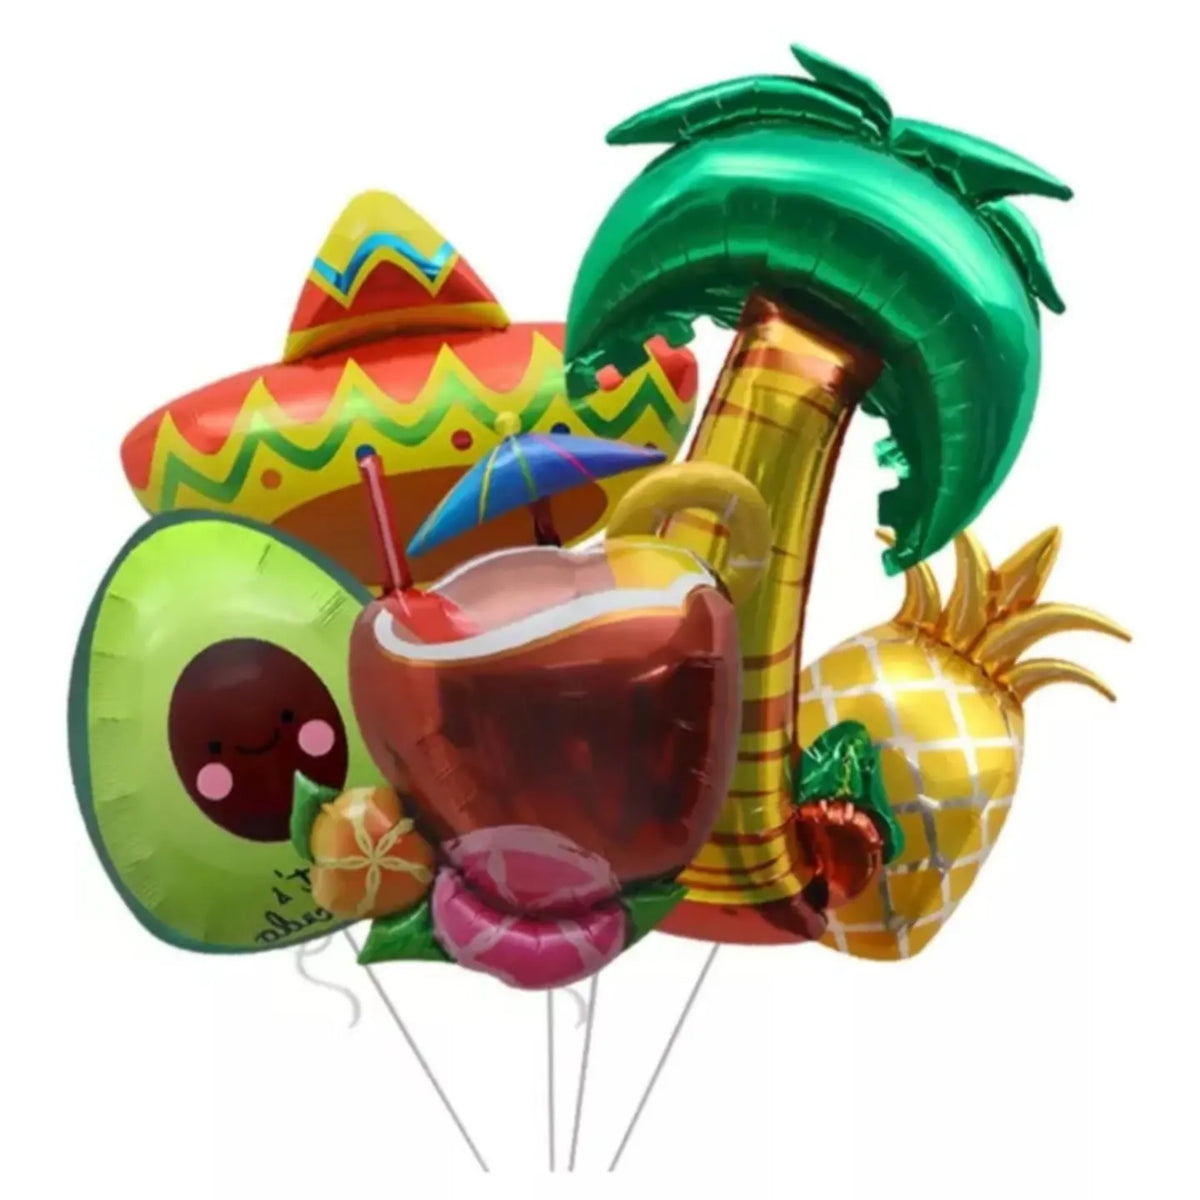 Pack 5 globos metalizados temática fiesta Hawai tropical